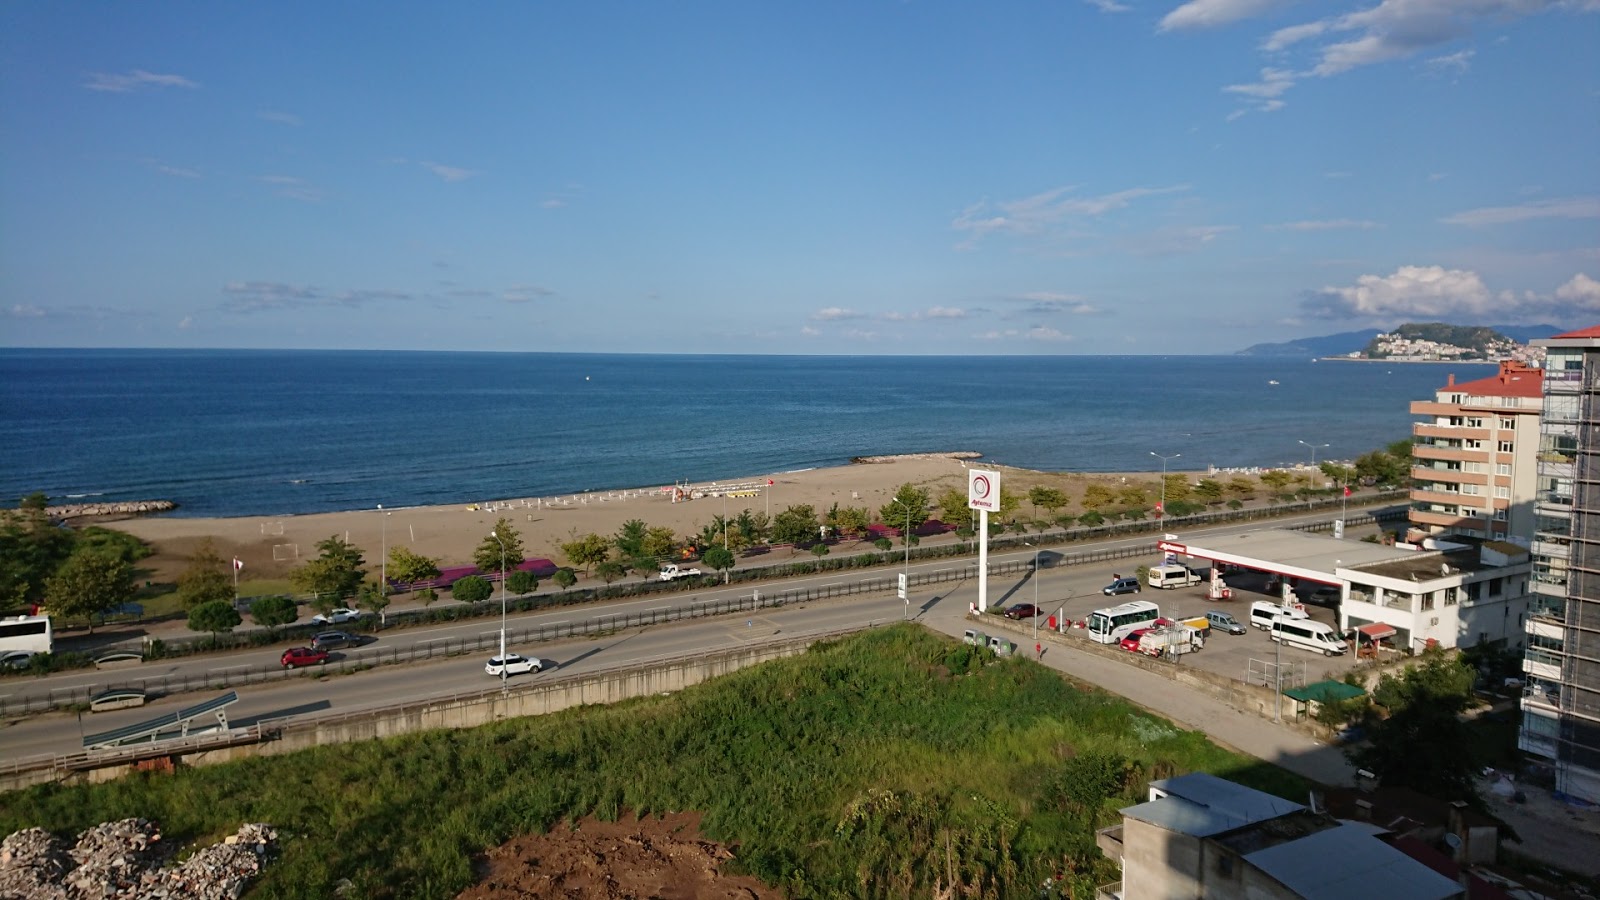 Photo of Municipal Beach - popular place among relax connoisseurs